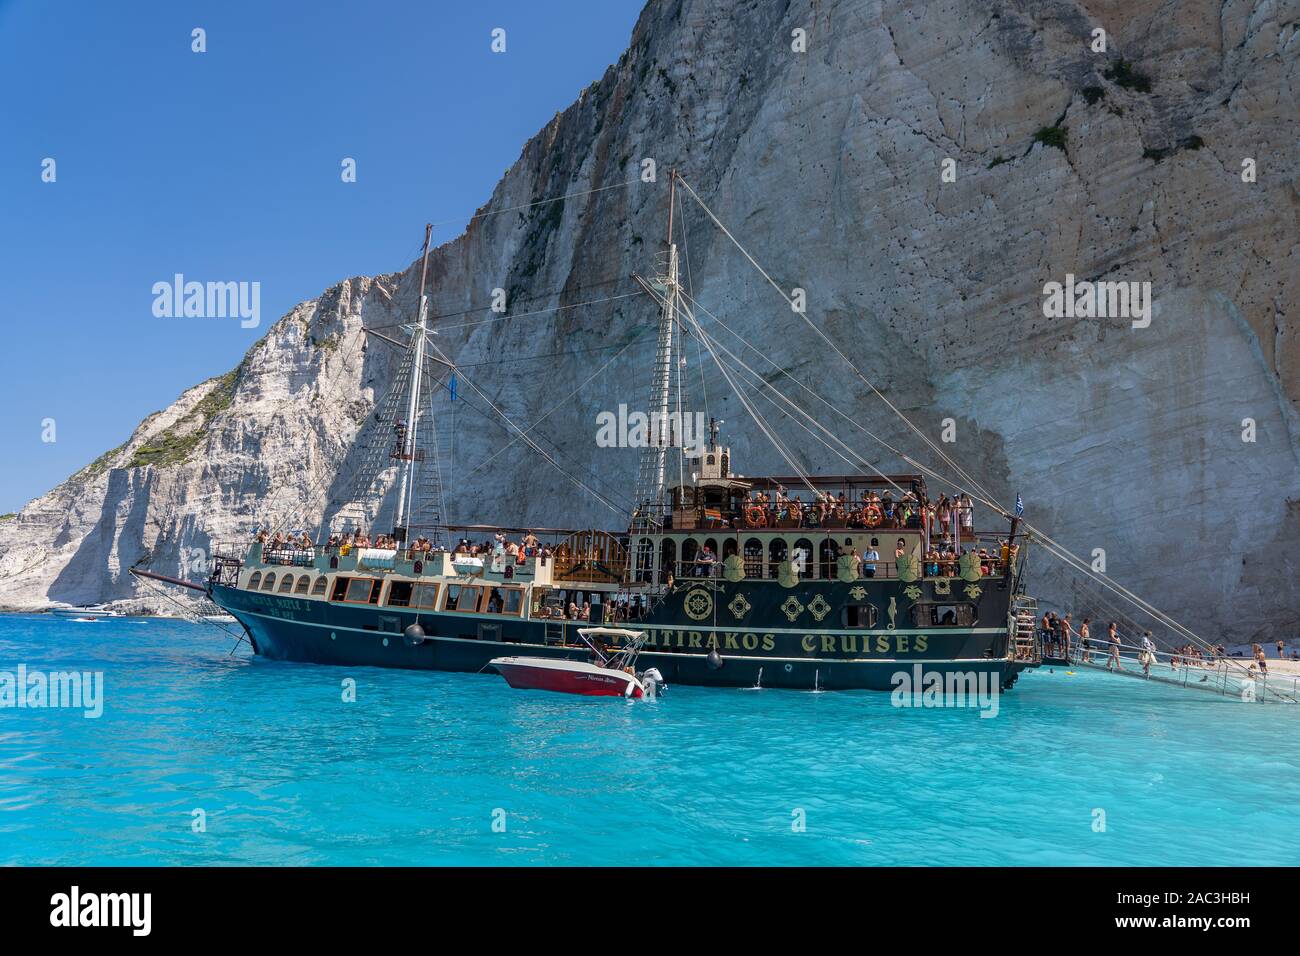 Zakynthos, Greece - August 20, 2019: Pirate ship style cruise ship full of tourists halt Zakynthos shipwreck Navagio bay Stock Photo